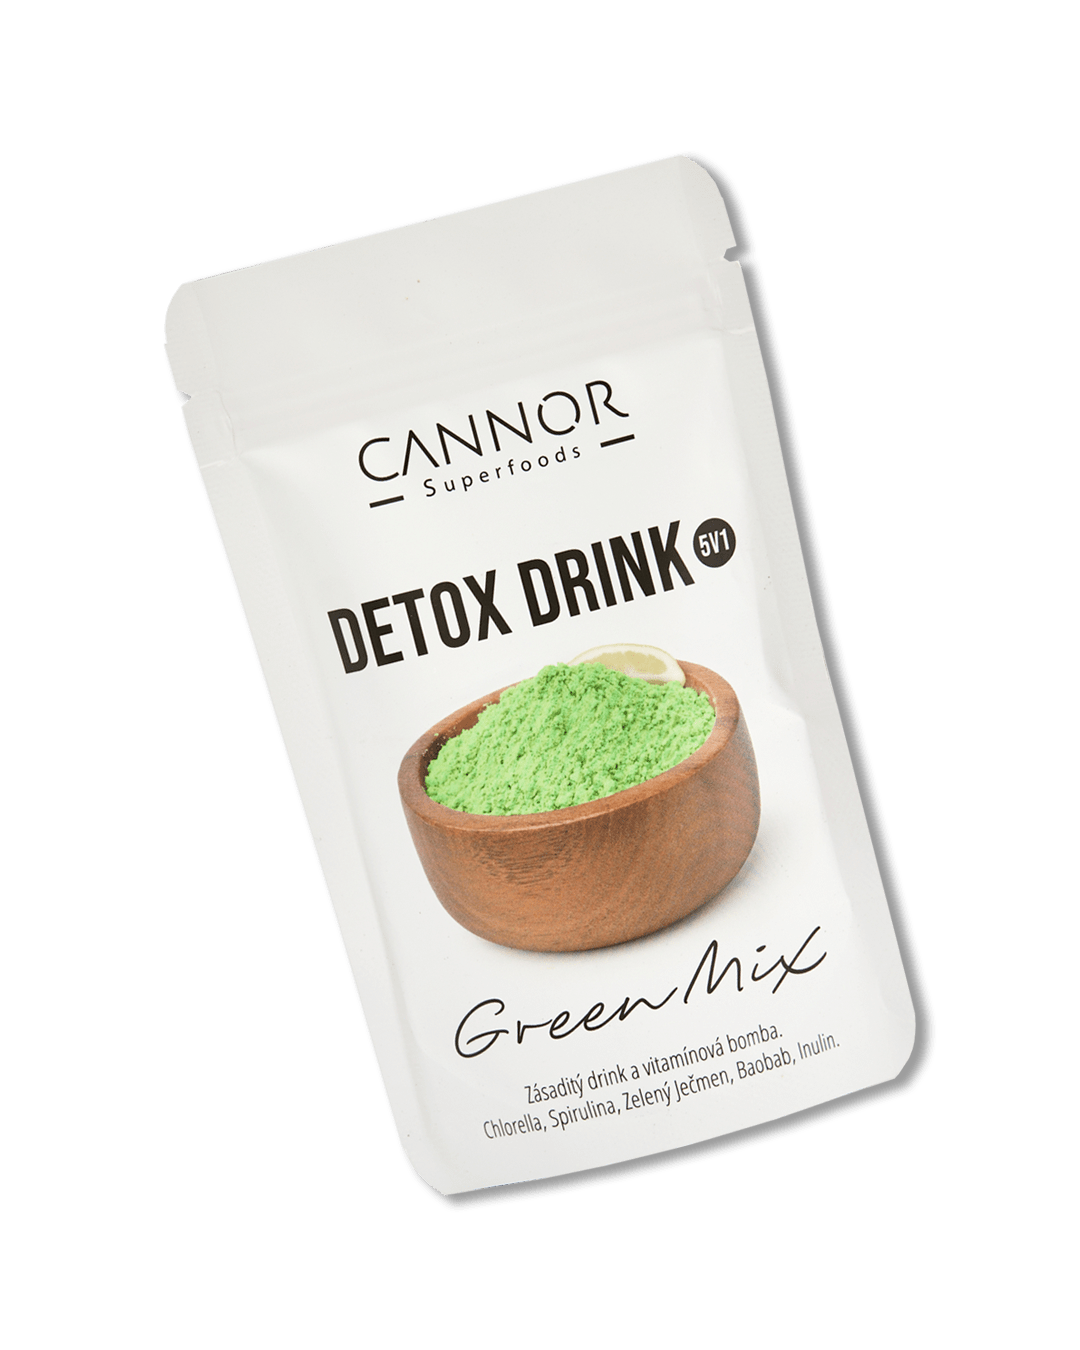 Detox drink 5v1 - 150g